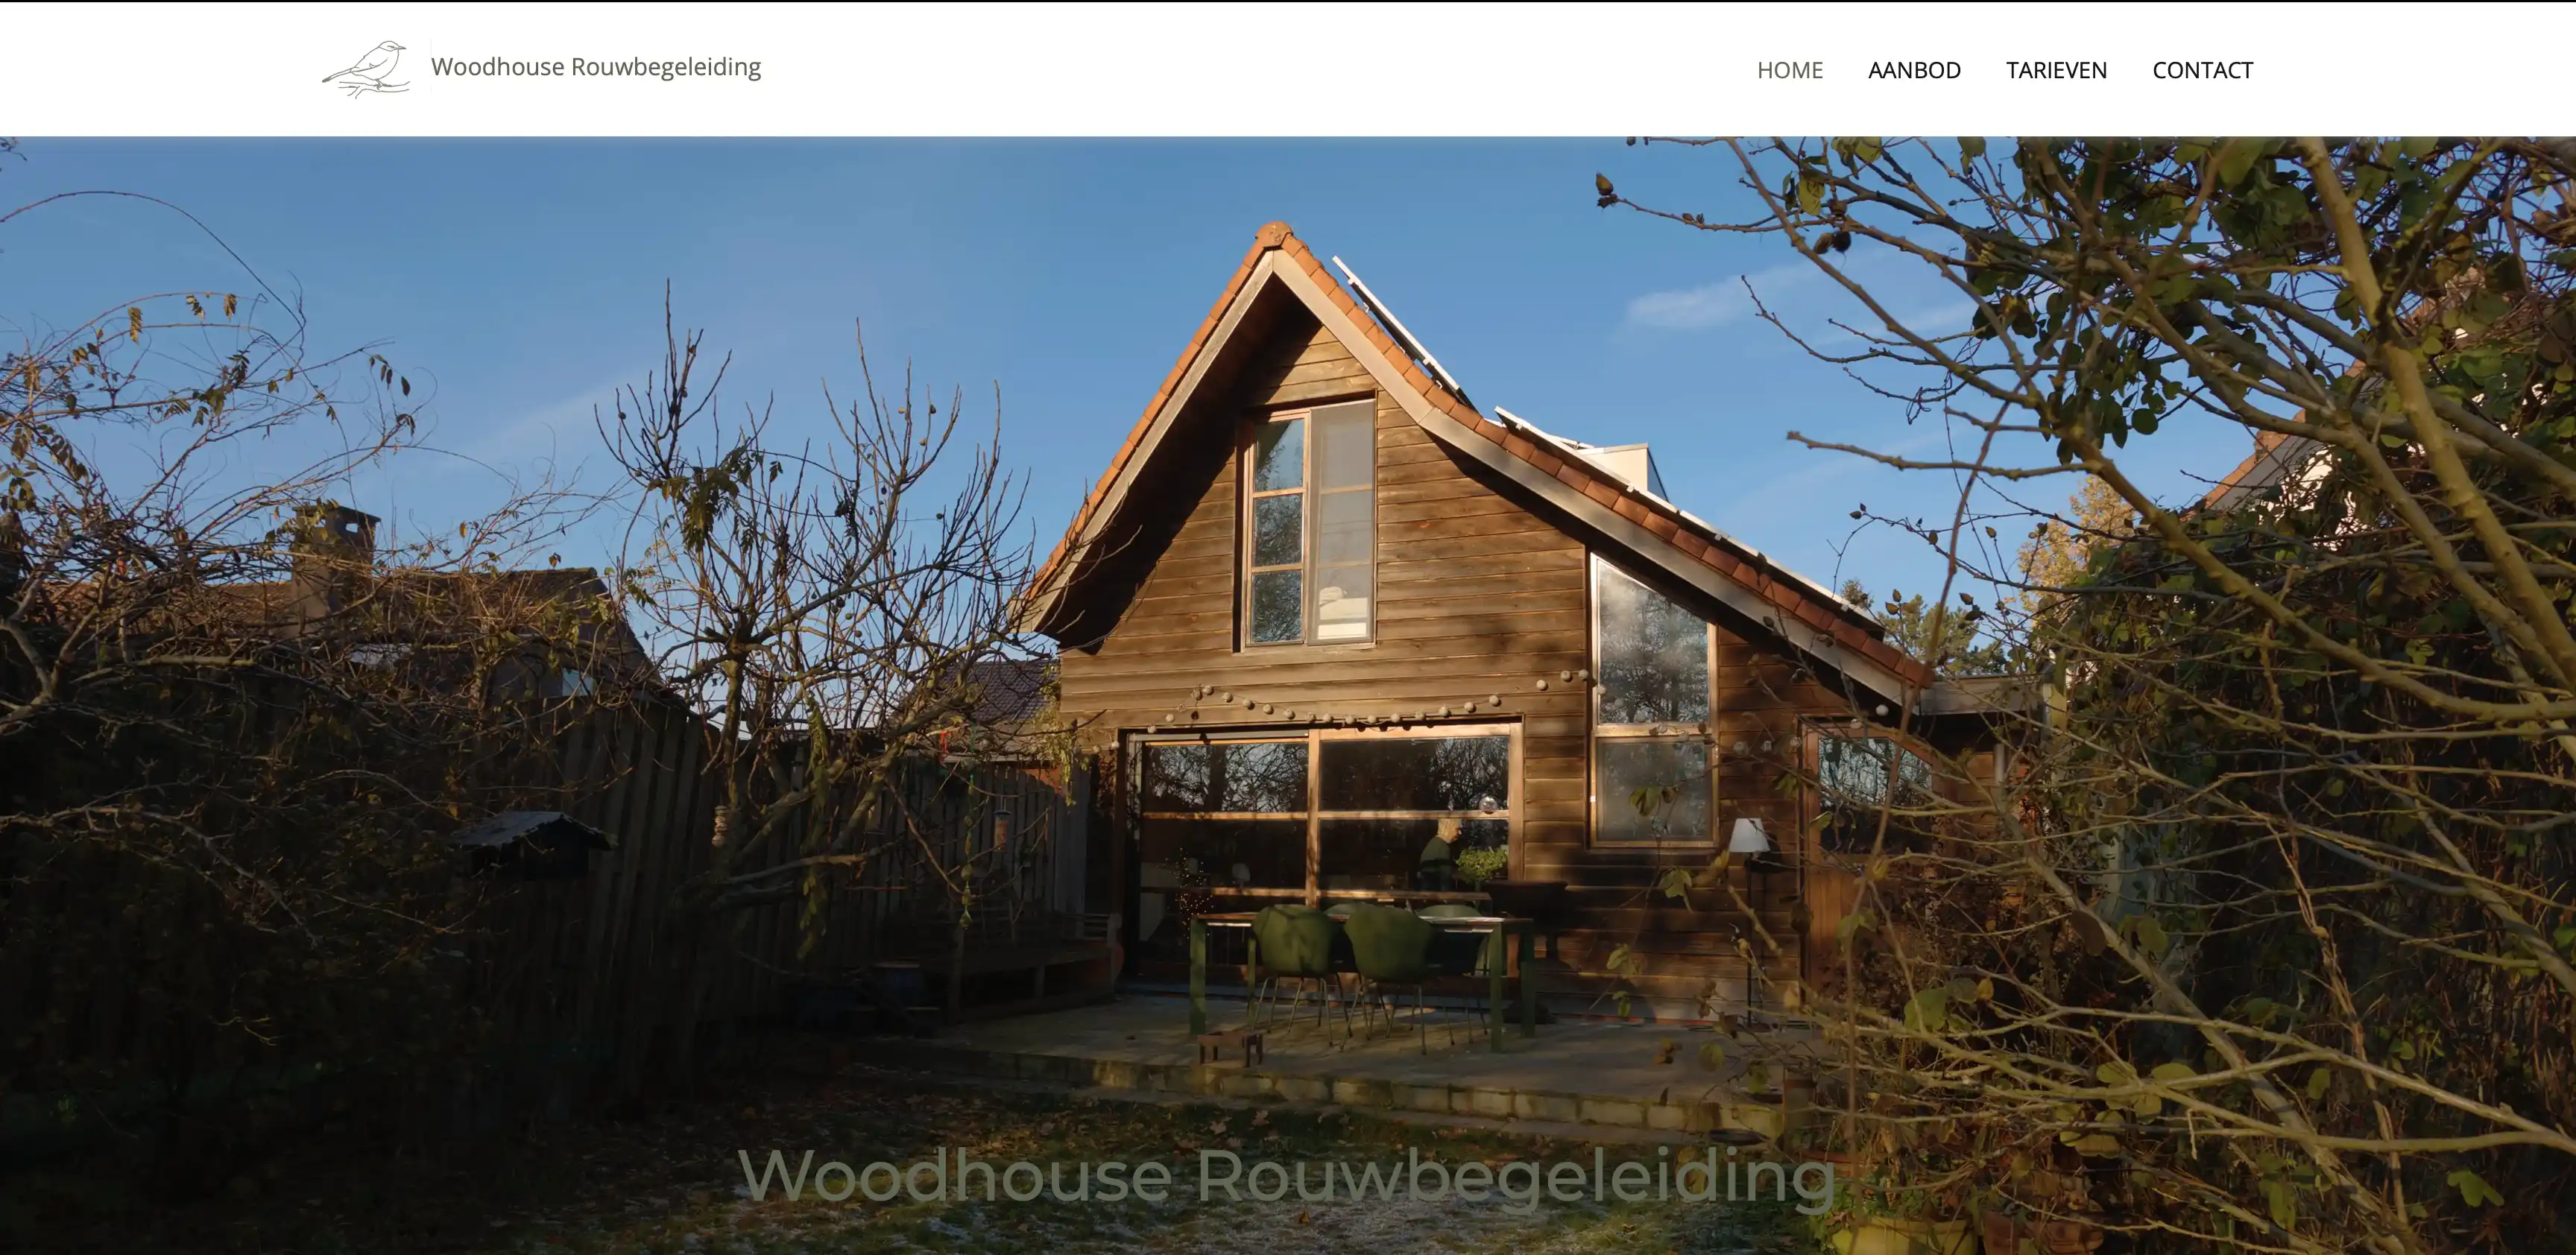 Homepage van Woodhouse Rouwbegeleiding